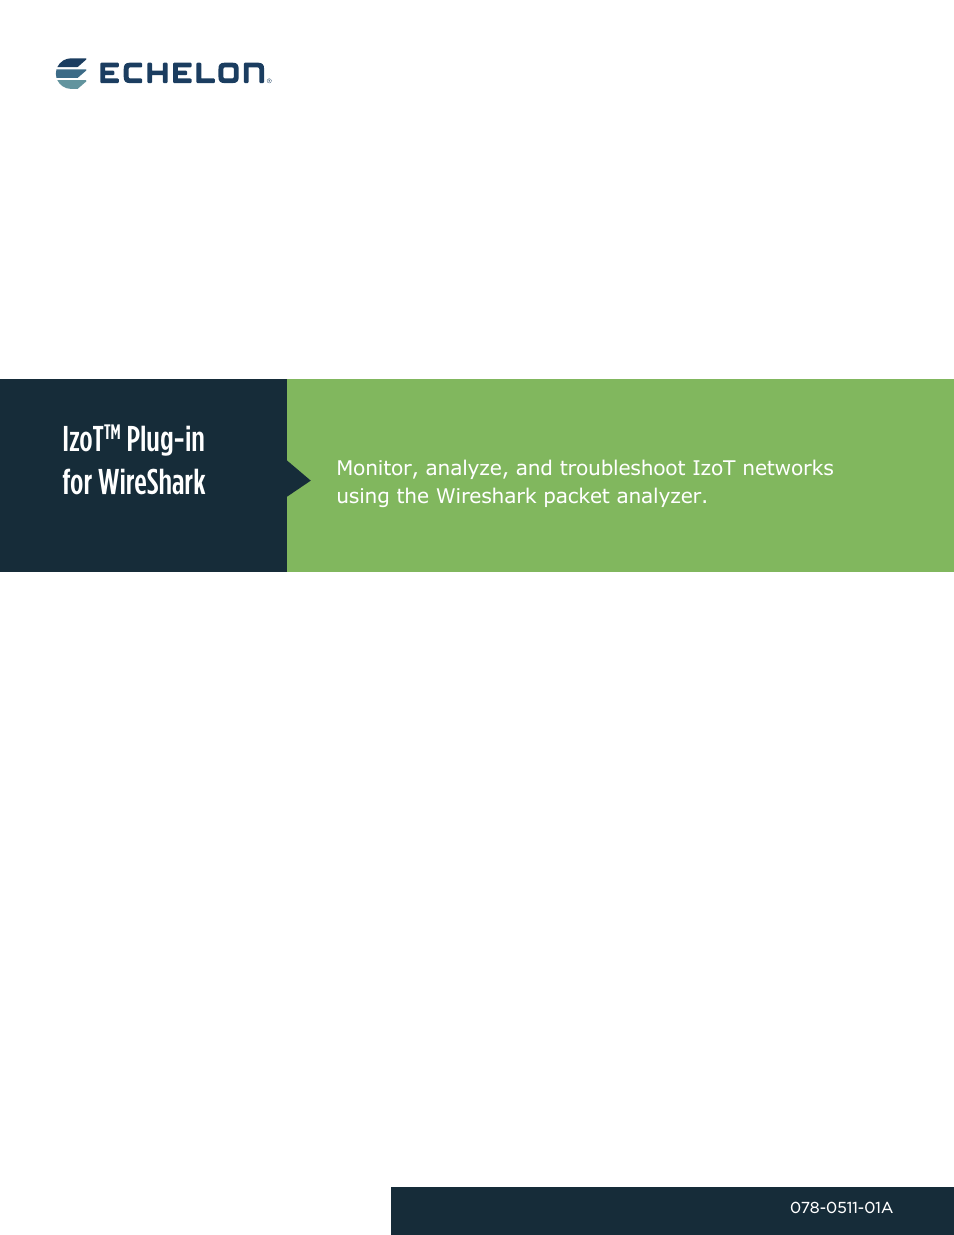 IzoT Plug-in for WireShark